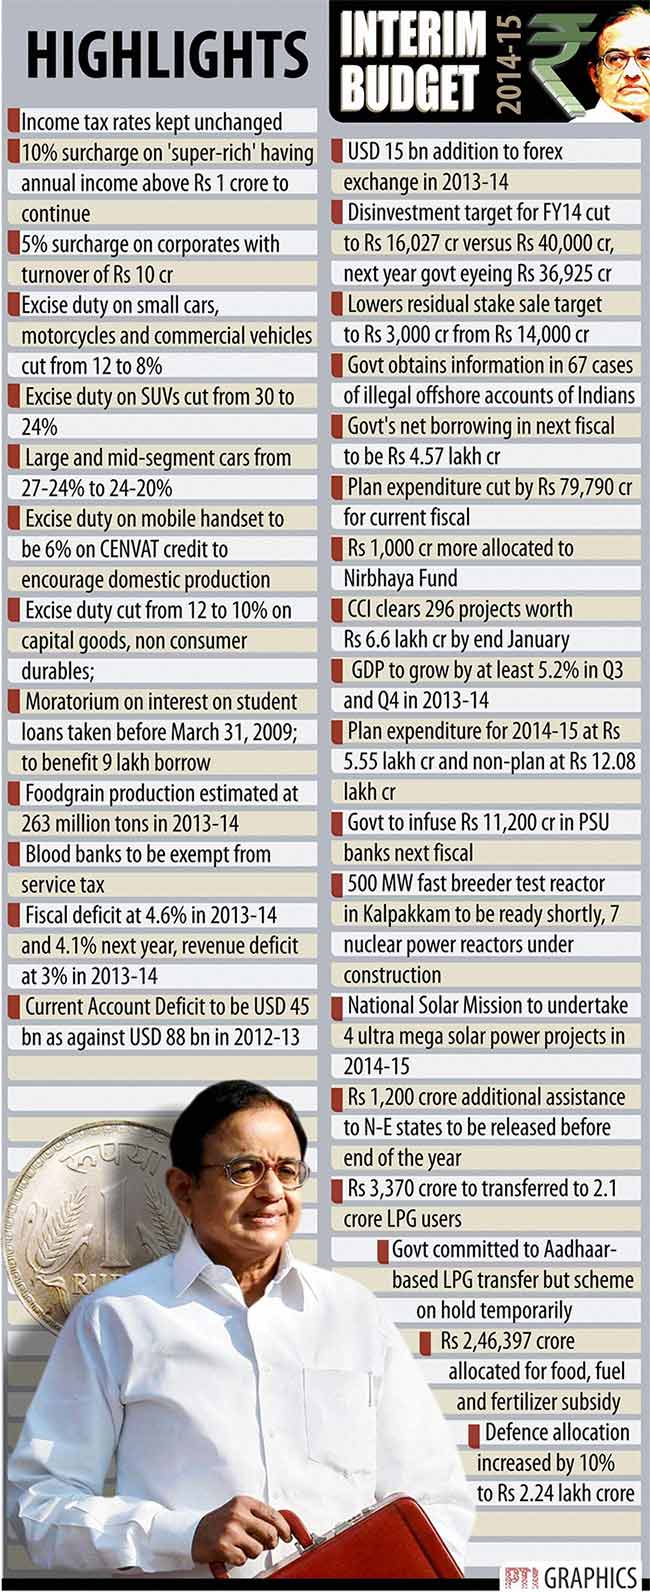 Interim budget 2014-15 at a glance